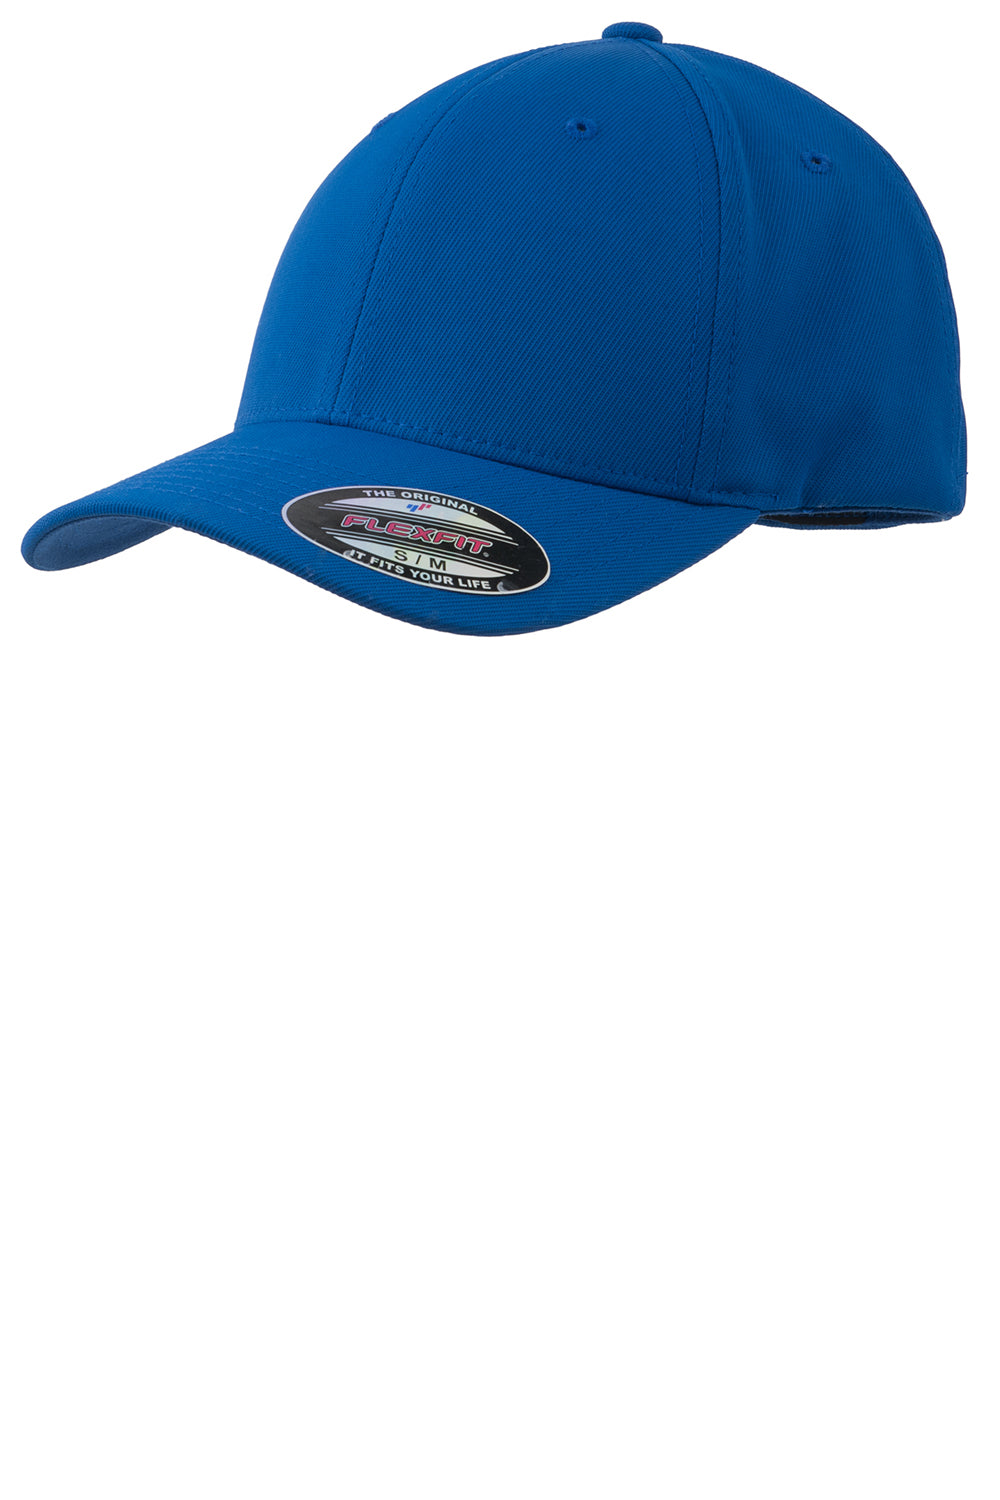 Sport-Tek STC17 Mens Moisture Wicking Stretch Fit Hat Royal Blue Front